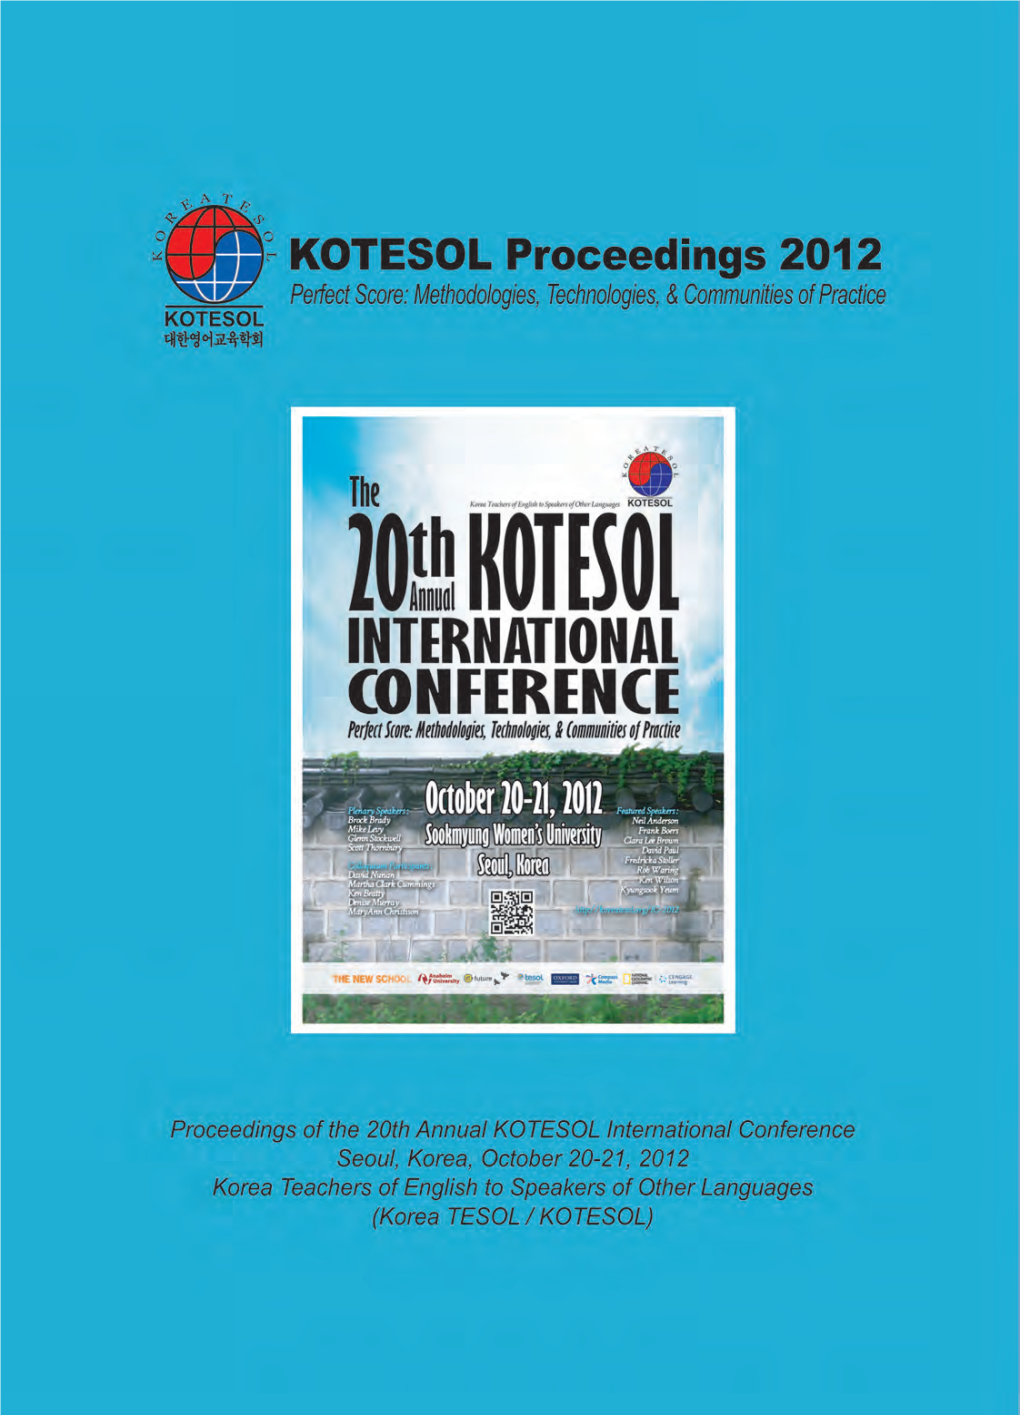 The 20Th Annual KOTESOL International Conference Seoul, Korea, October 20-21, 2012